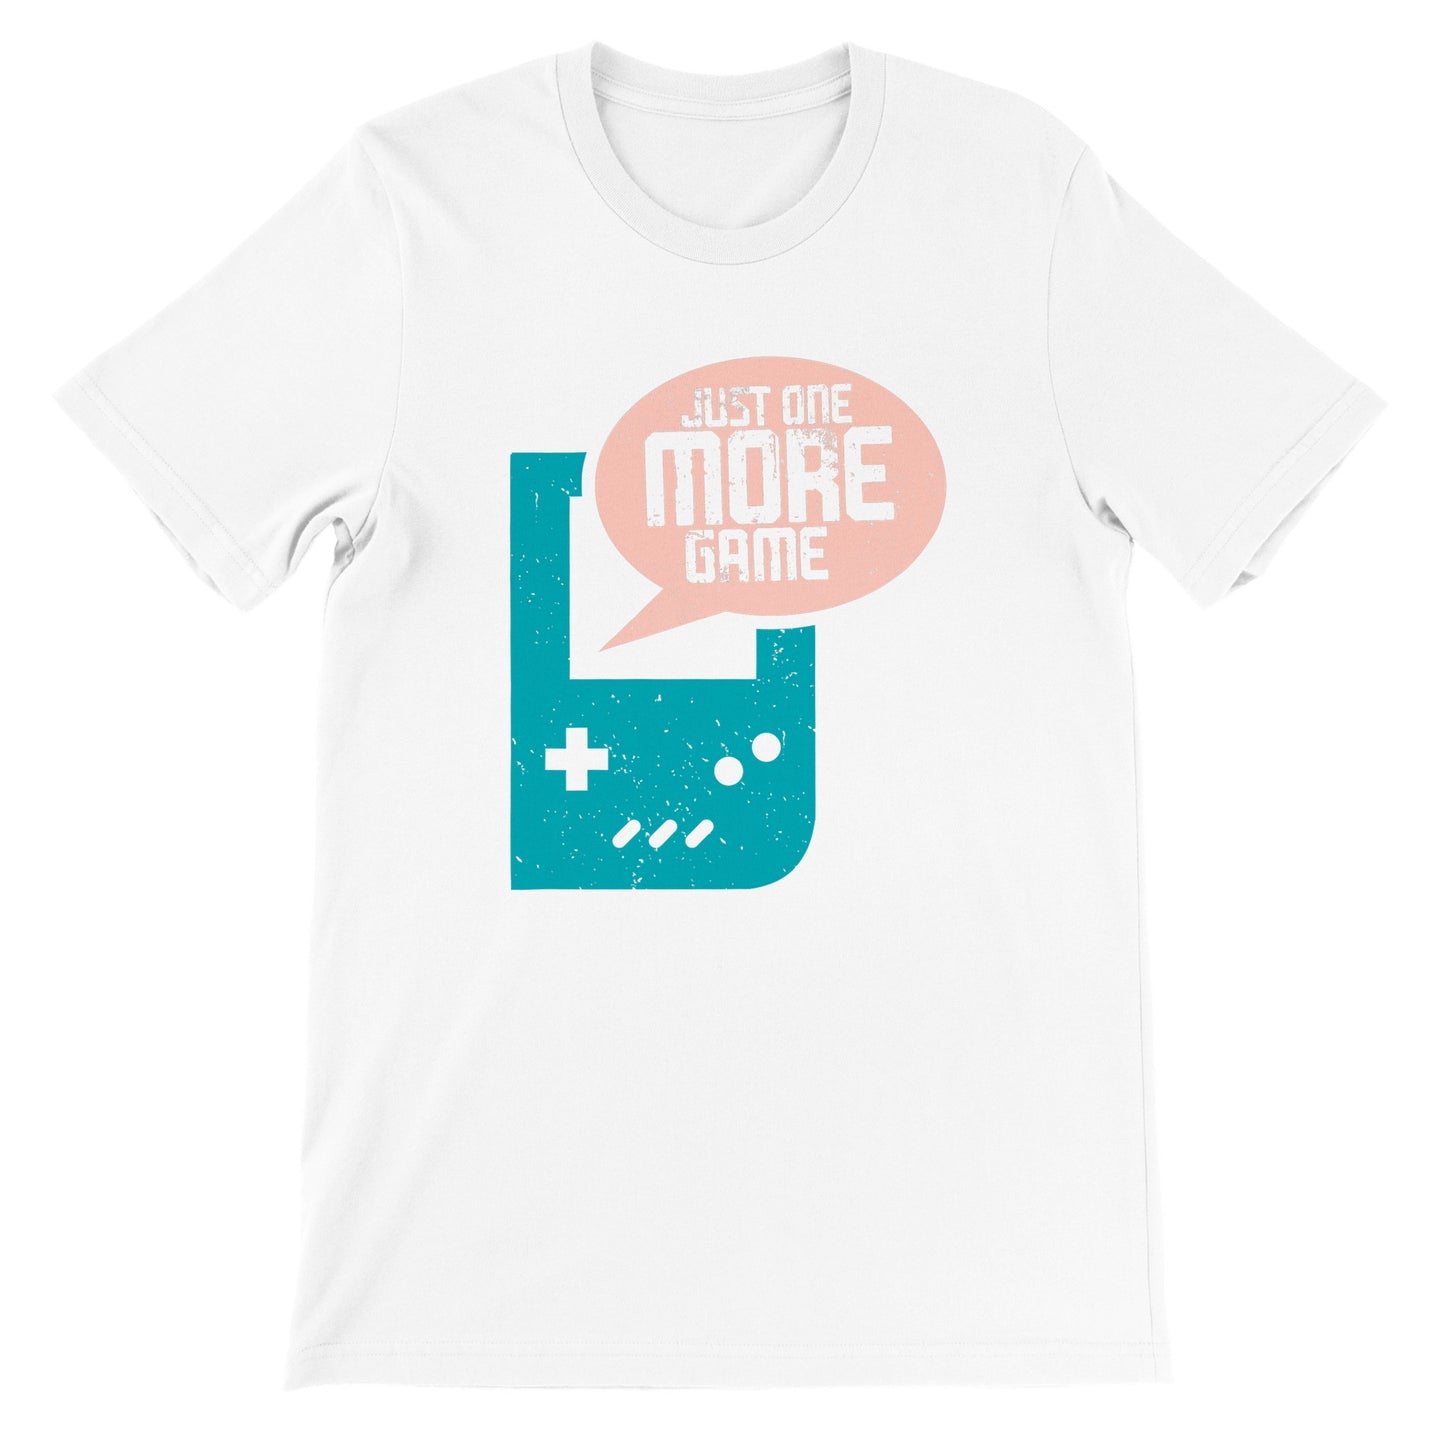 Gaming T-shirts - Just One More Game - Premium Unisex T-shirt